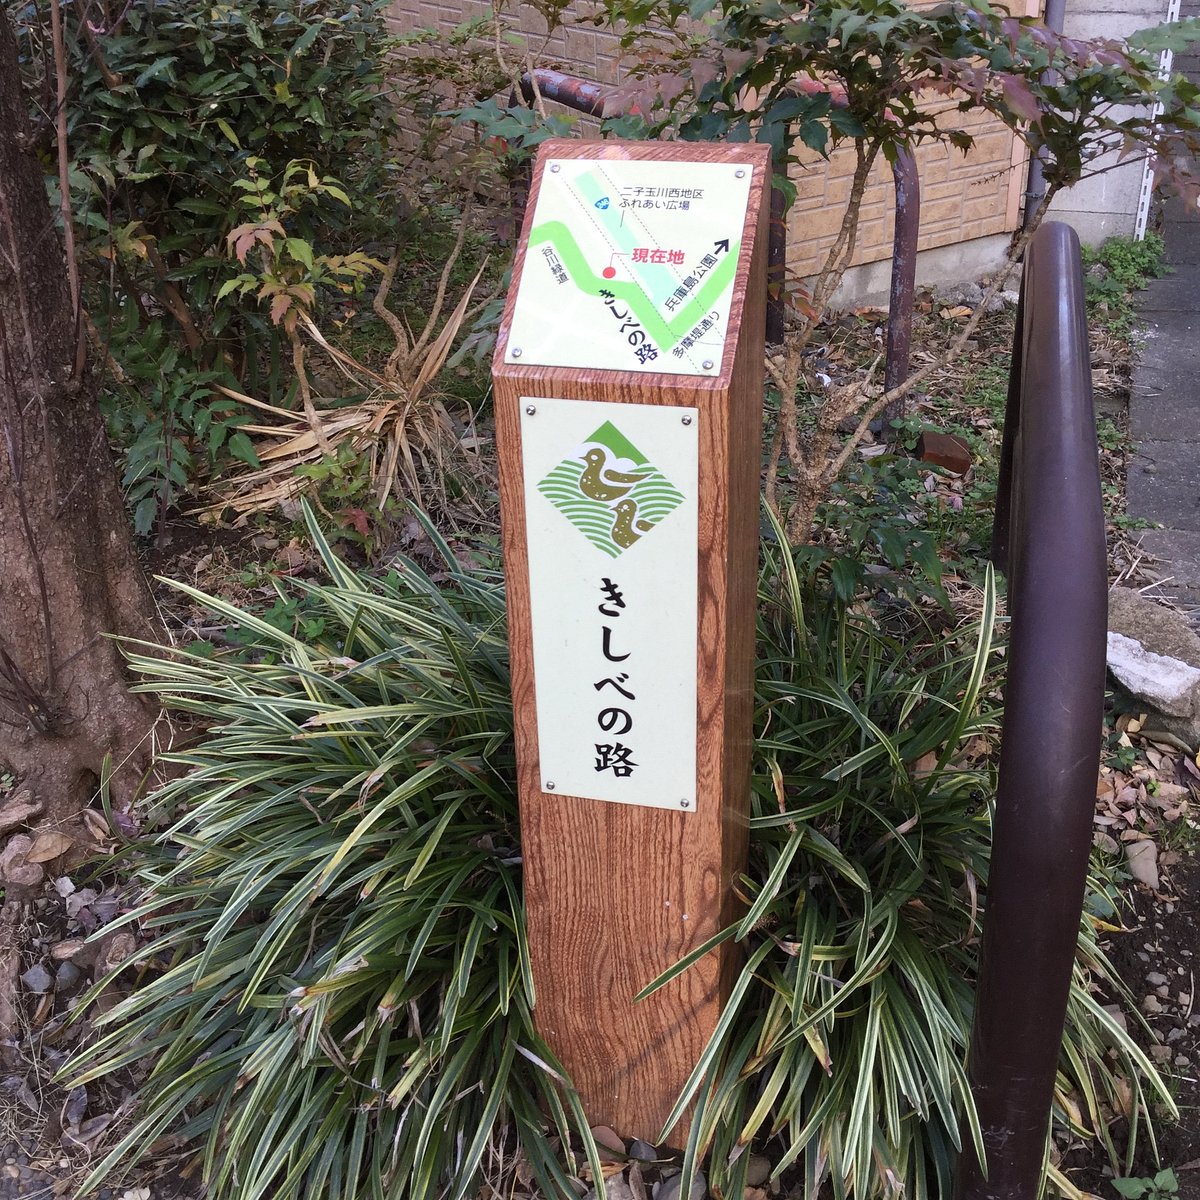 Kishibe Route Setagaya 21 All You Need To Know Before You Go With Photos Tripadvisor